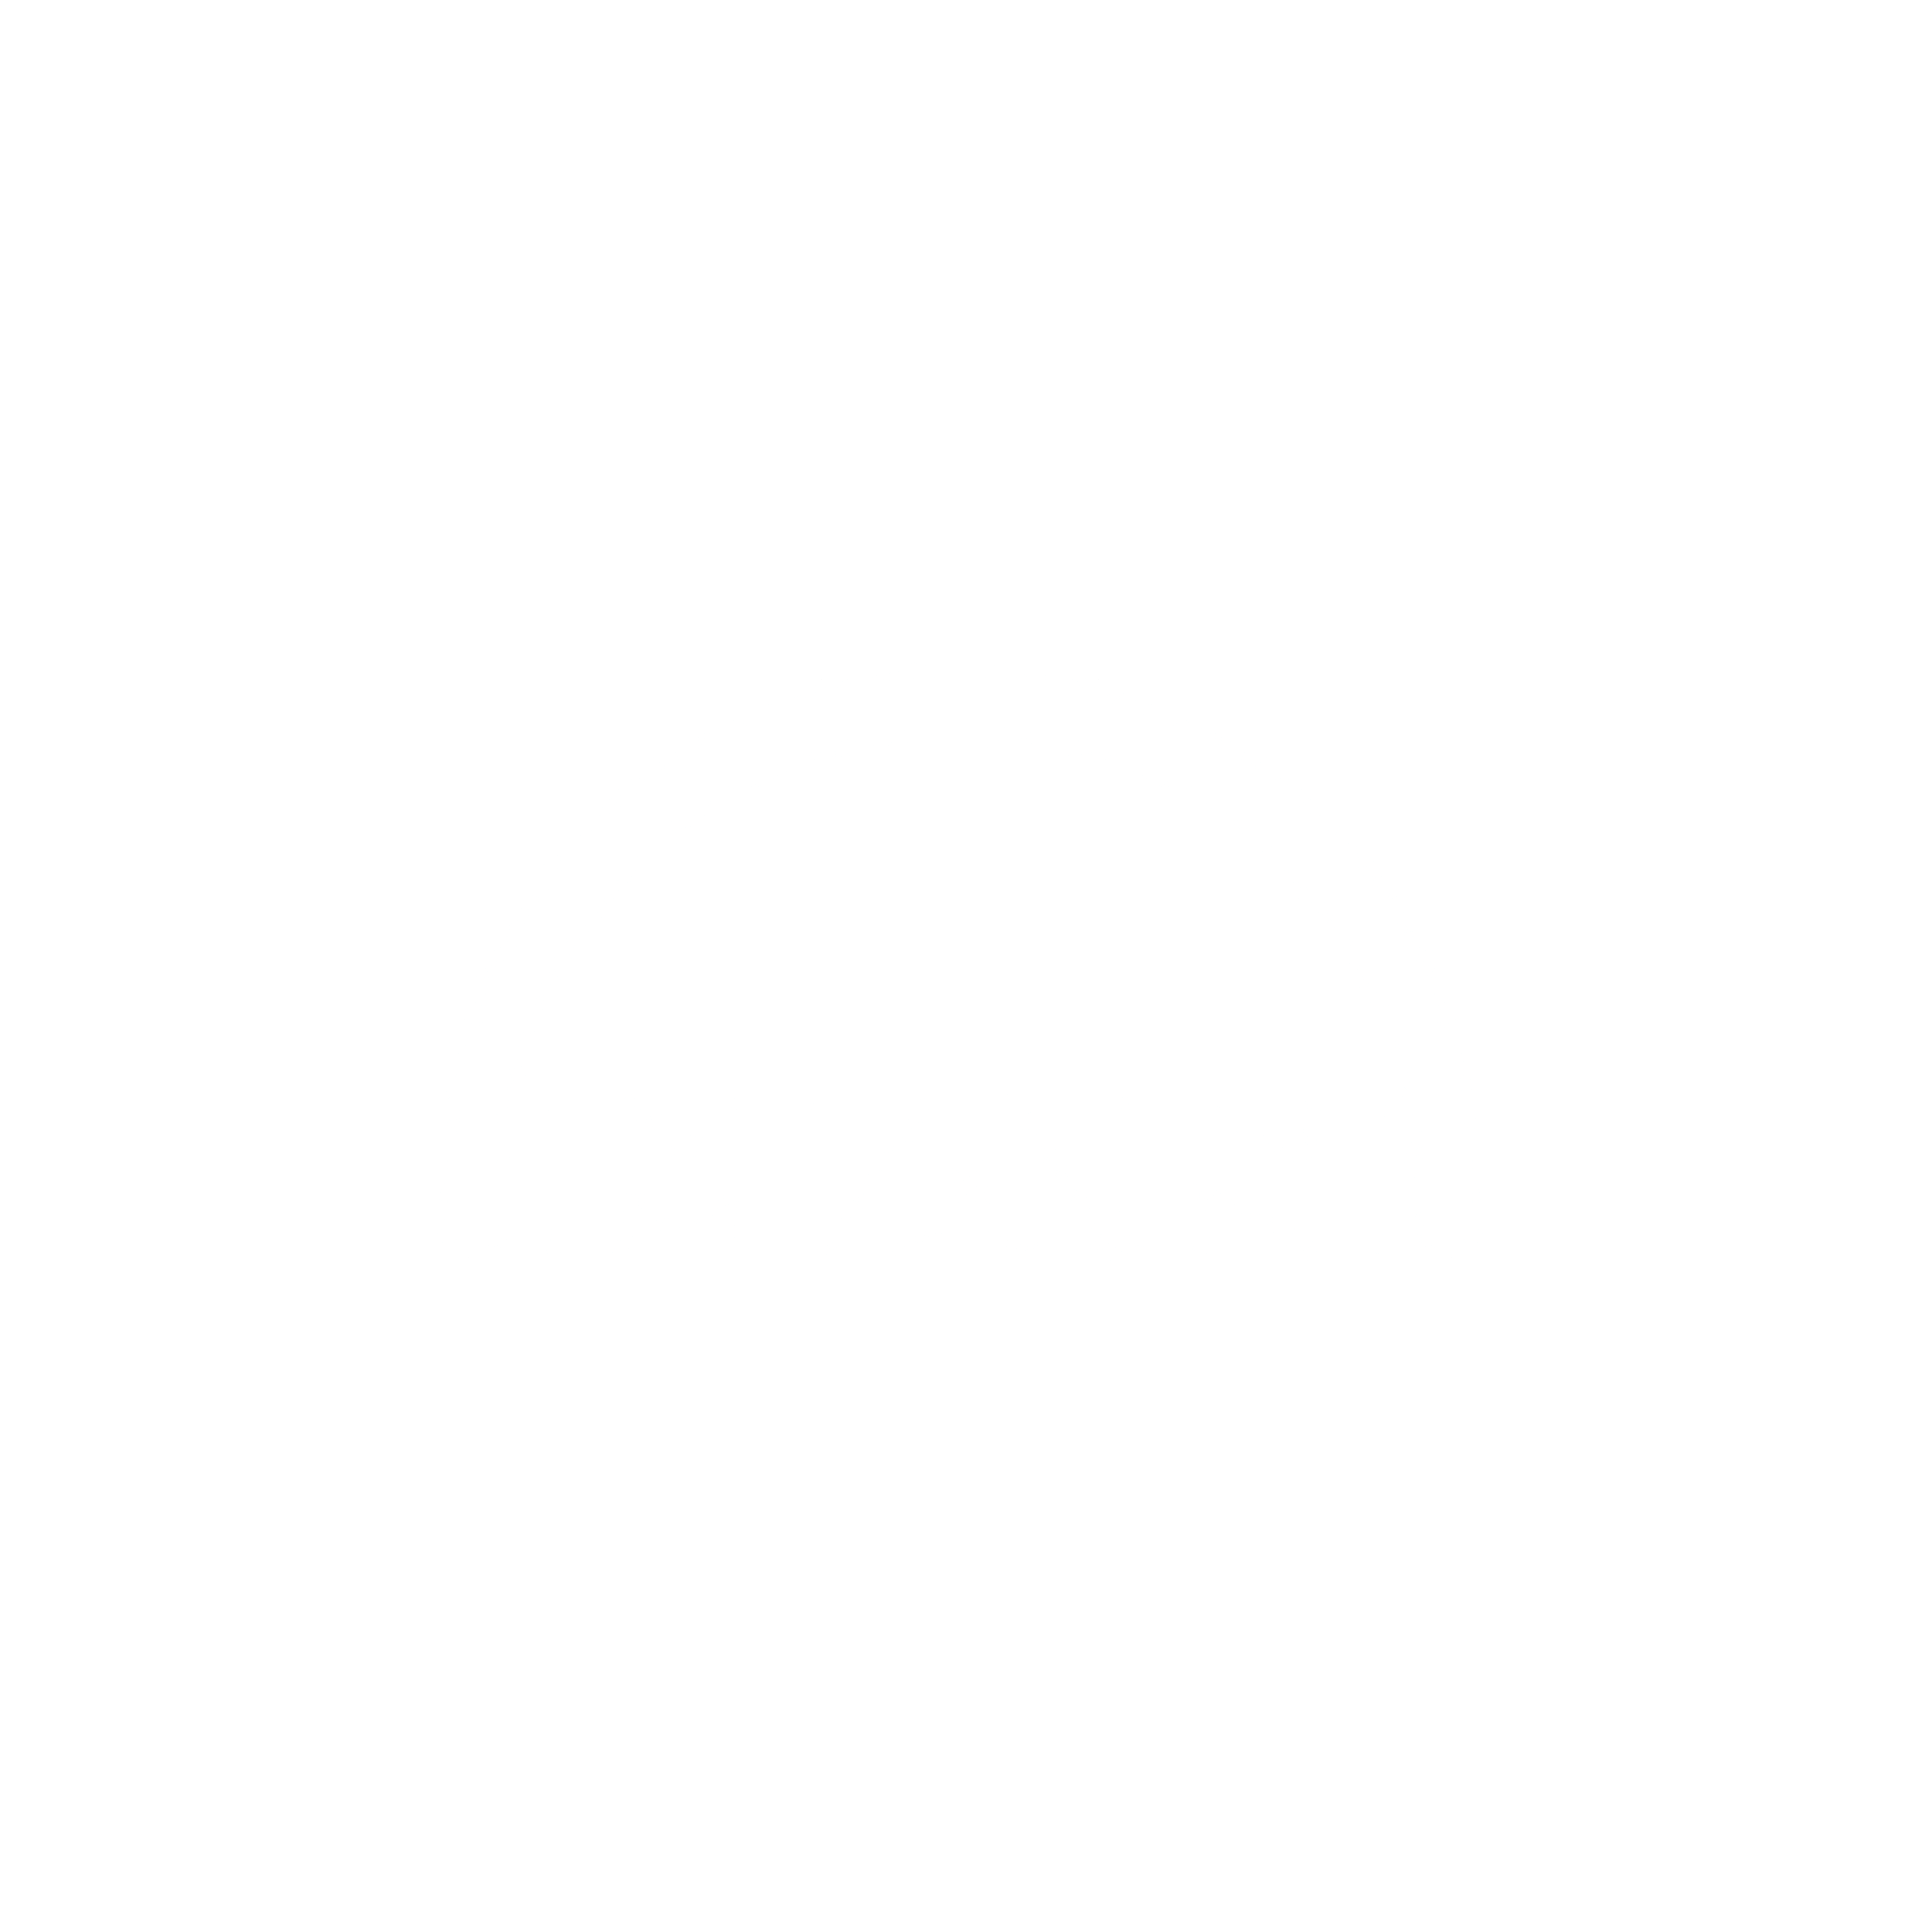 MAN Energy Solutions Logo